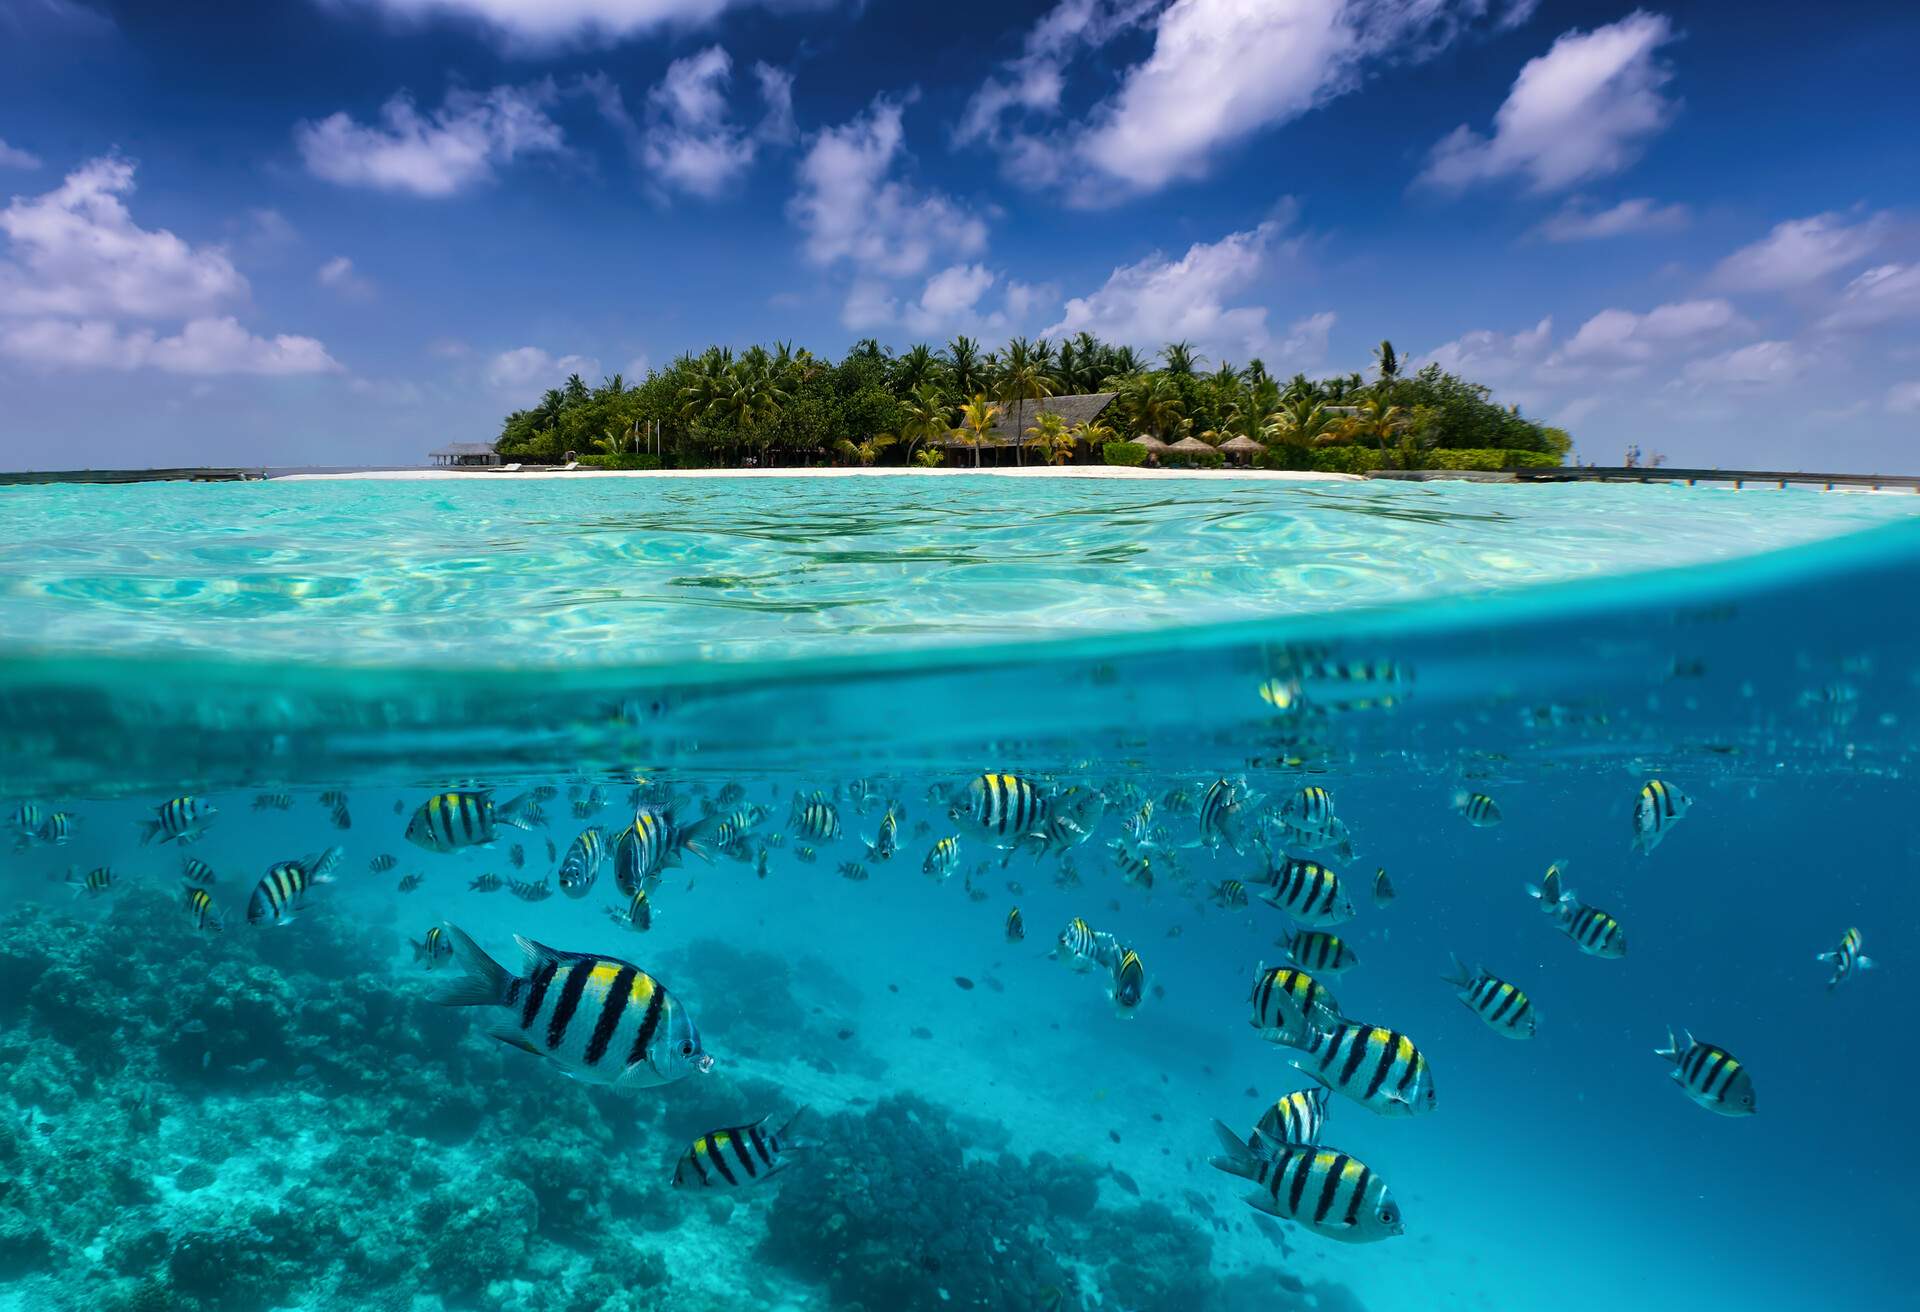 DEST_MALDIVES_THEME_TROPICAL_OCEAN_FISH_UNDERWATER_PALM-TREES-shutterstock-portfolio_1285168165